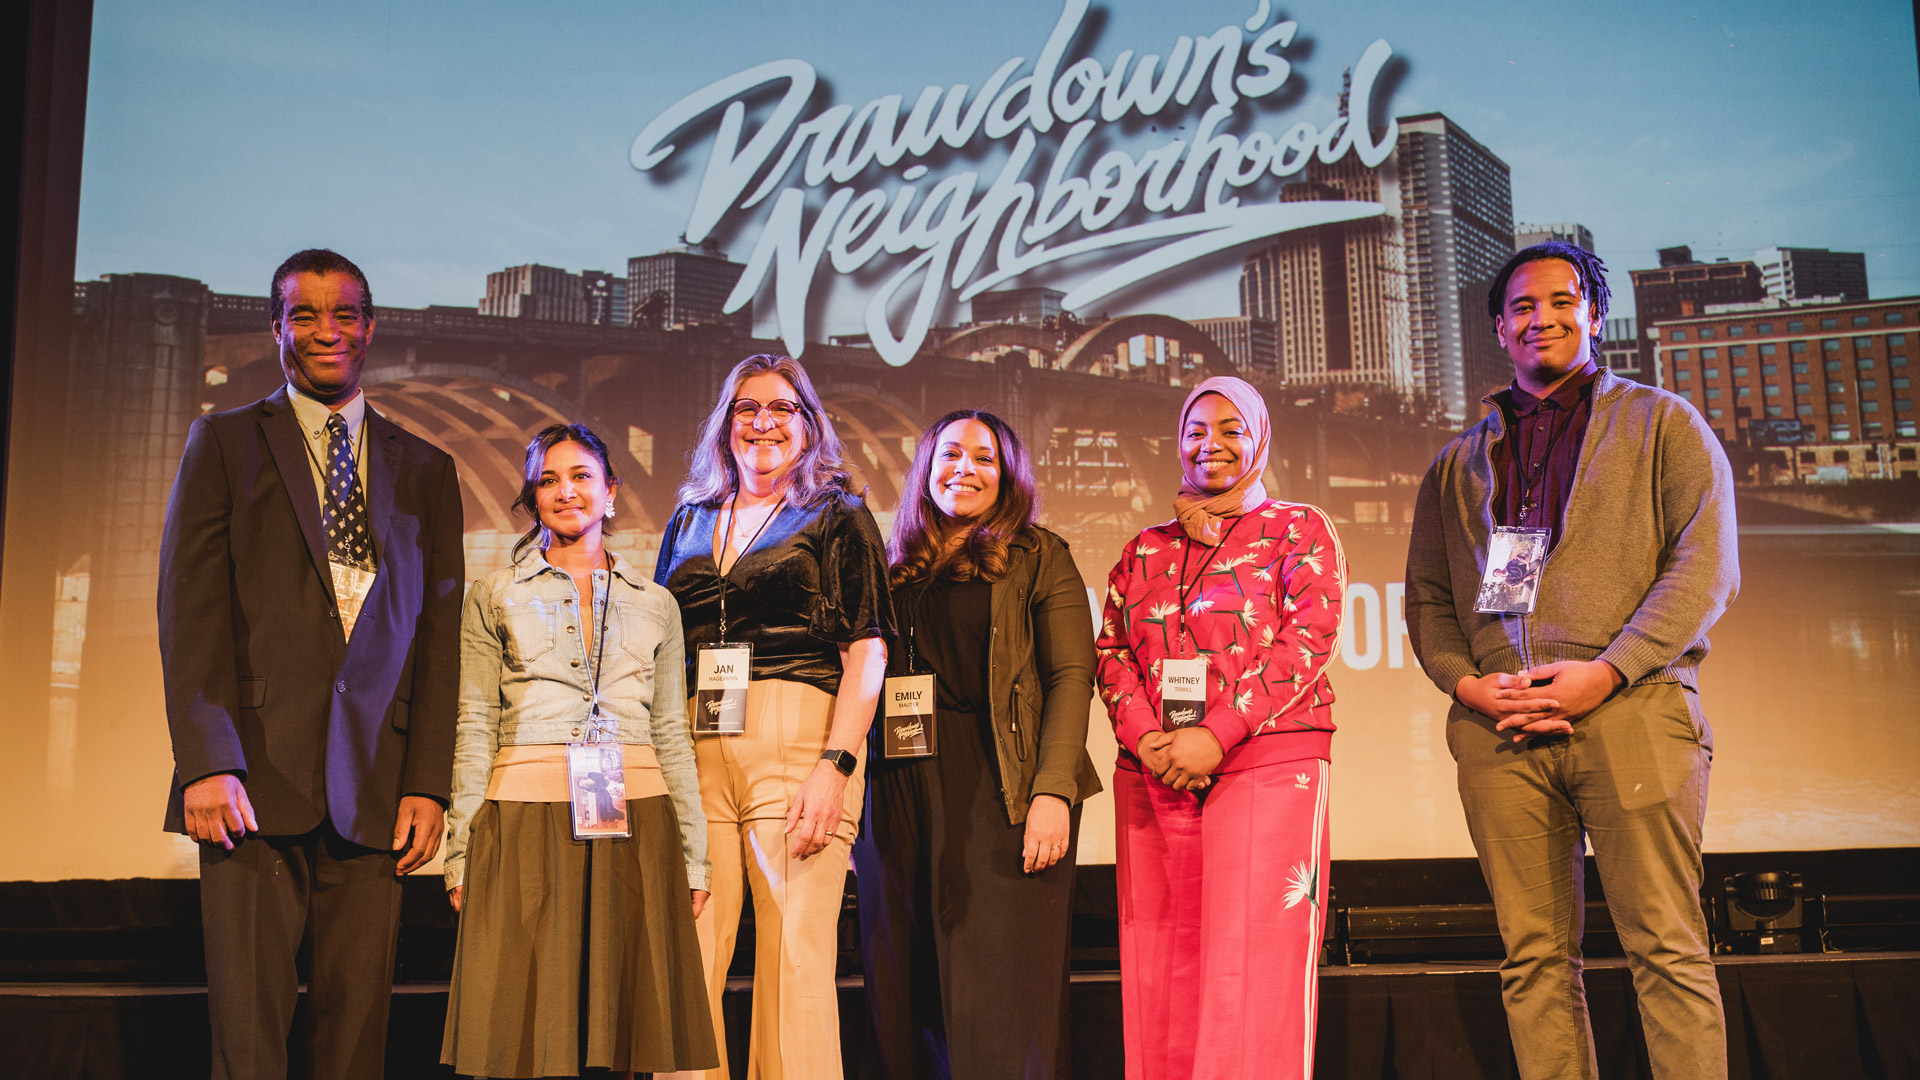 Drawdown's Neighborhood launch event in the Twin Cities